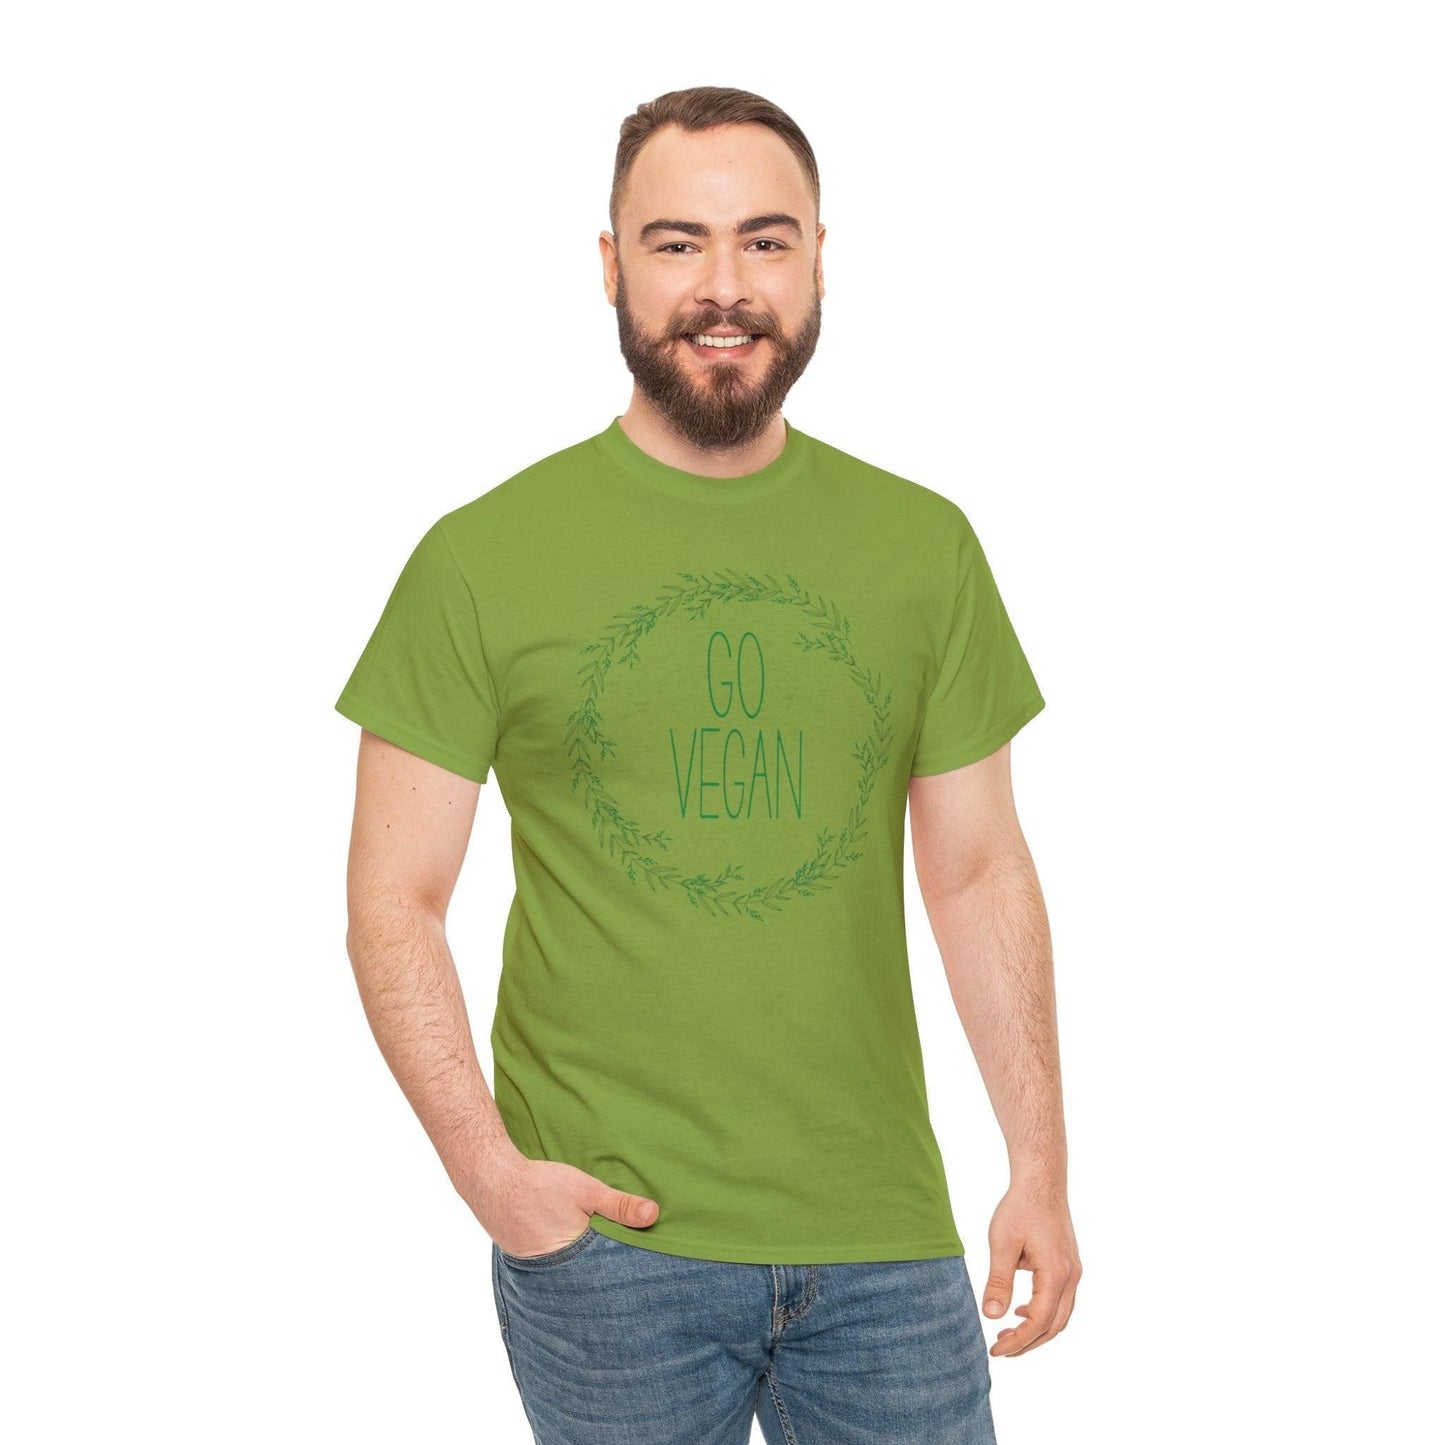 Go Vegan Unisex Tee T-Shirt Kiwi S 